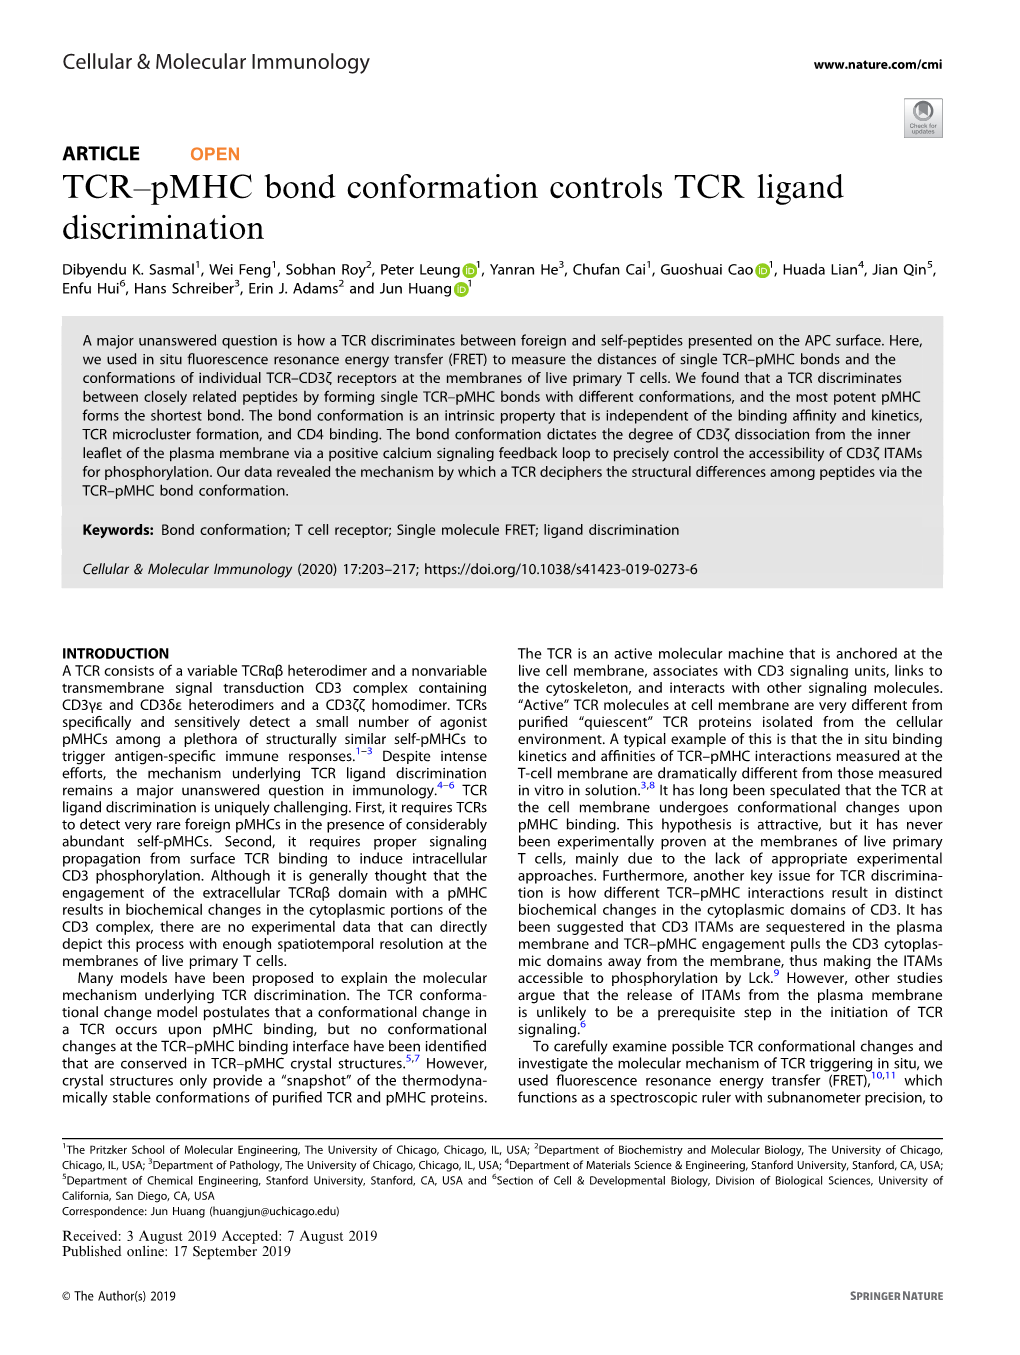 Pmhc Bond Conformation Controls TCR Ligand Discrimination